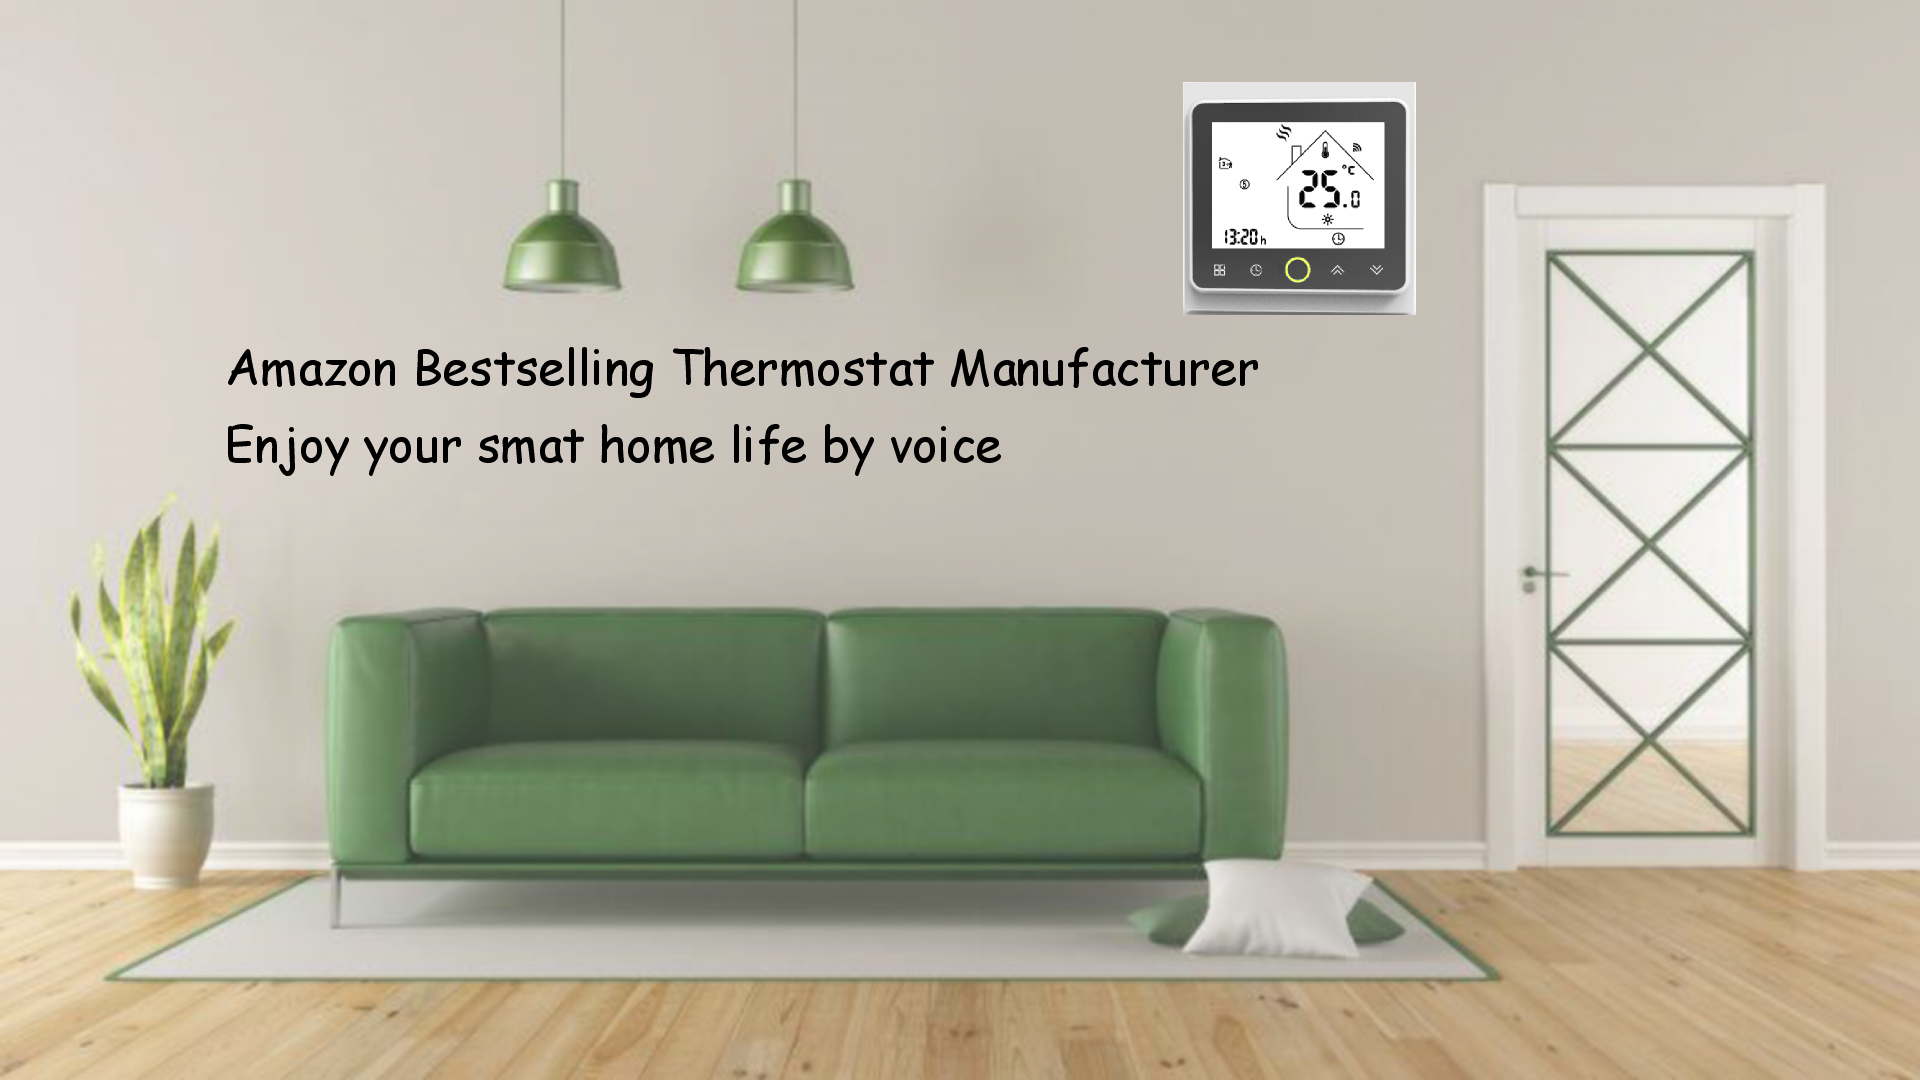 BECA BHT-002Zwave Water Heating/Water Boiler/Gas Boiler/Electric Heating Room Thermostat-Xiamen Beca Energysaving Technology